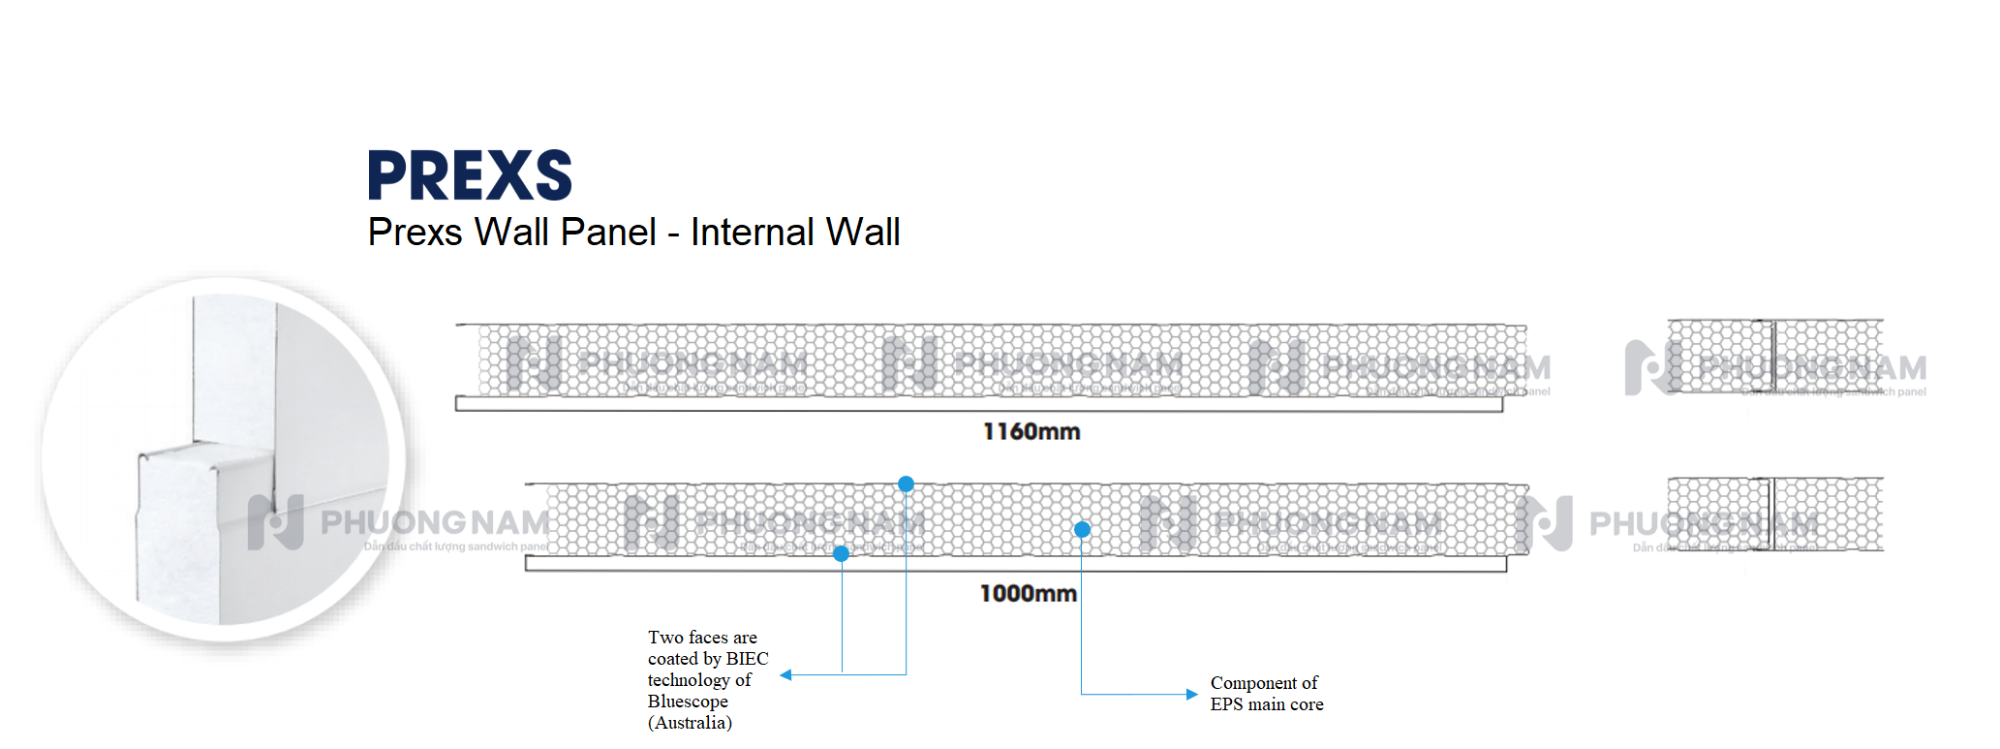 Prexs Wall Panel - Internal Wall